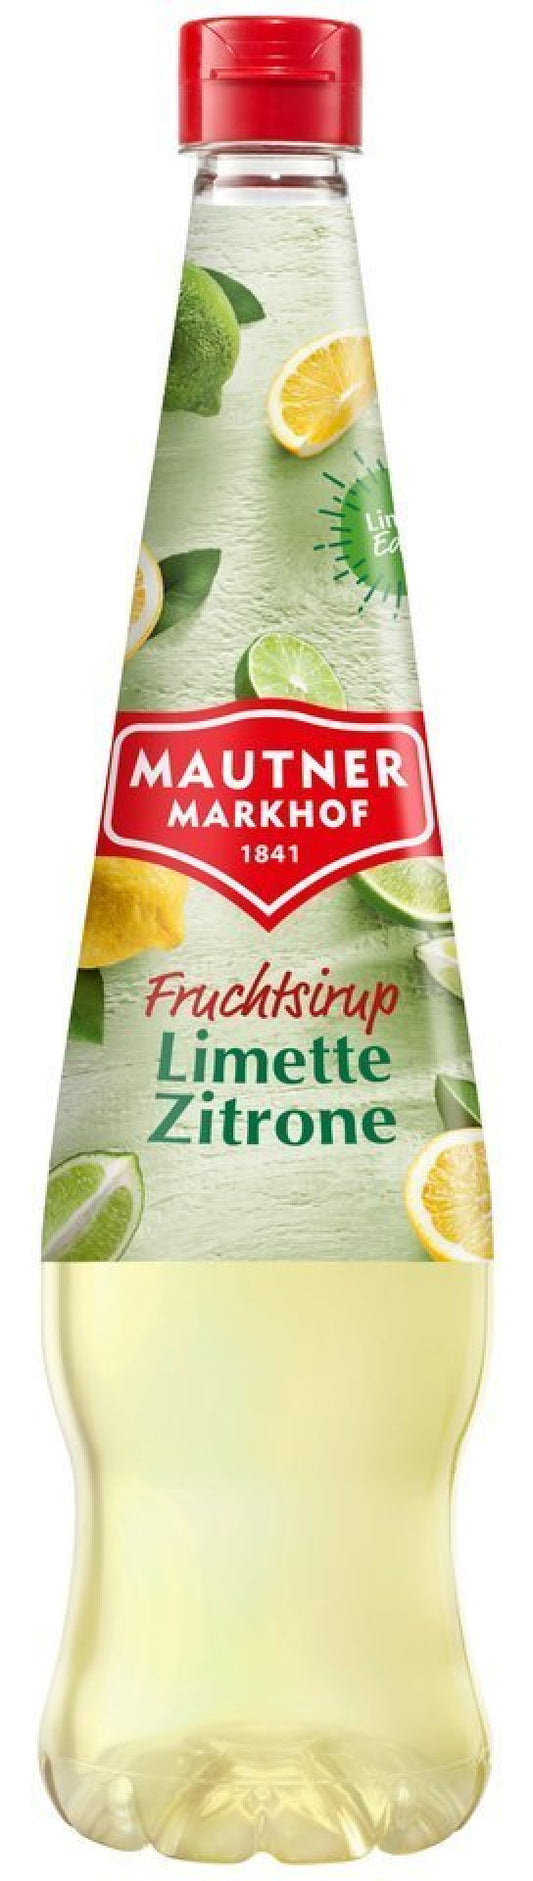 Mautner Markhof Sirup Limette Zitrone